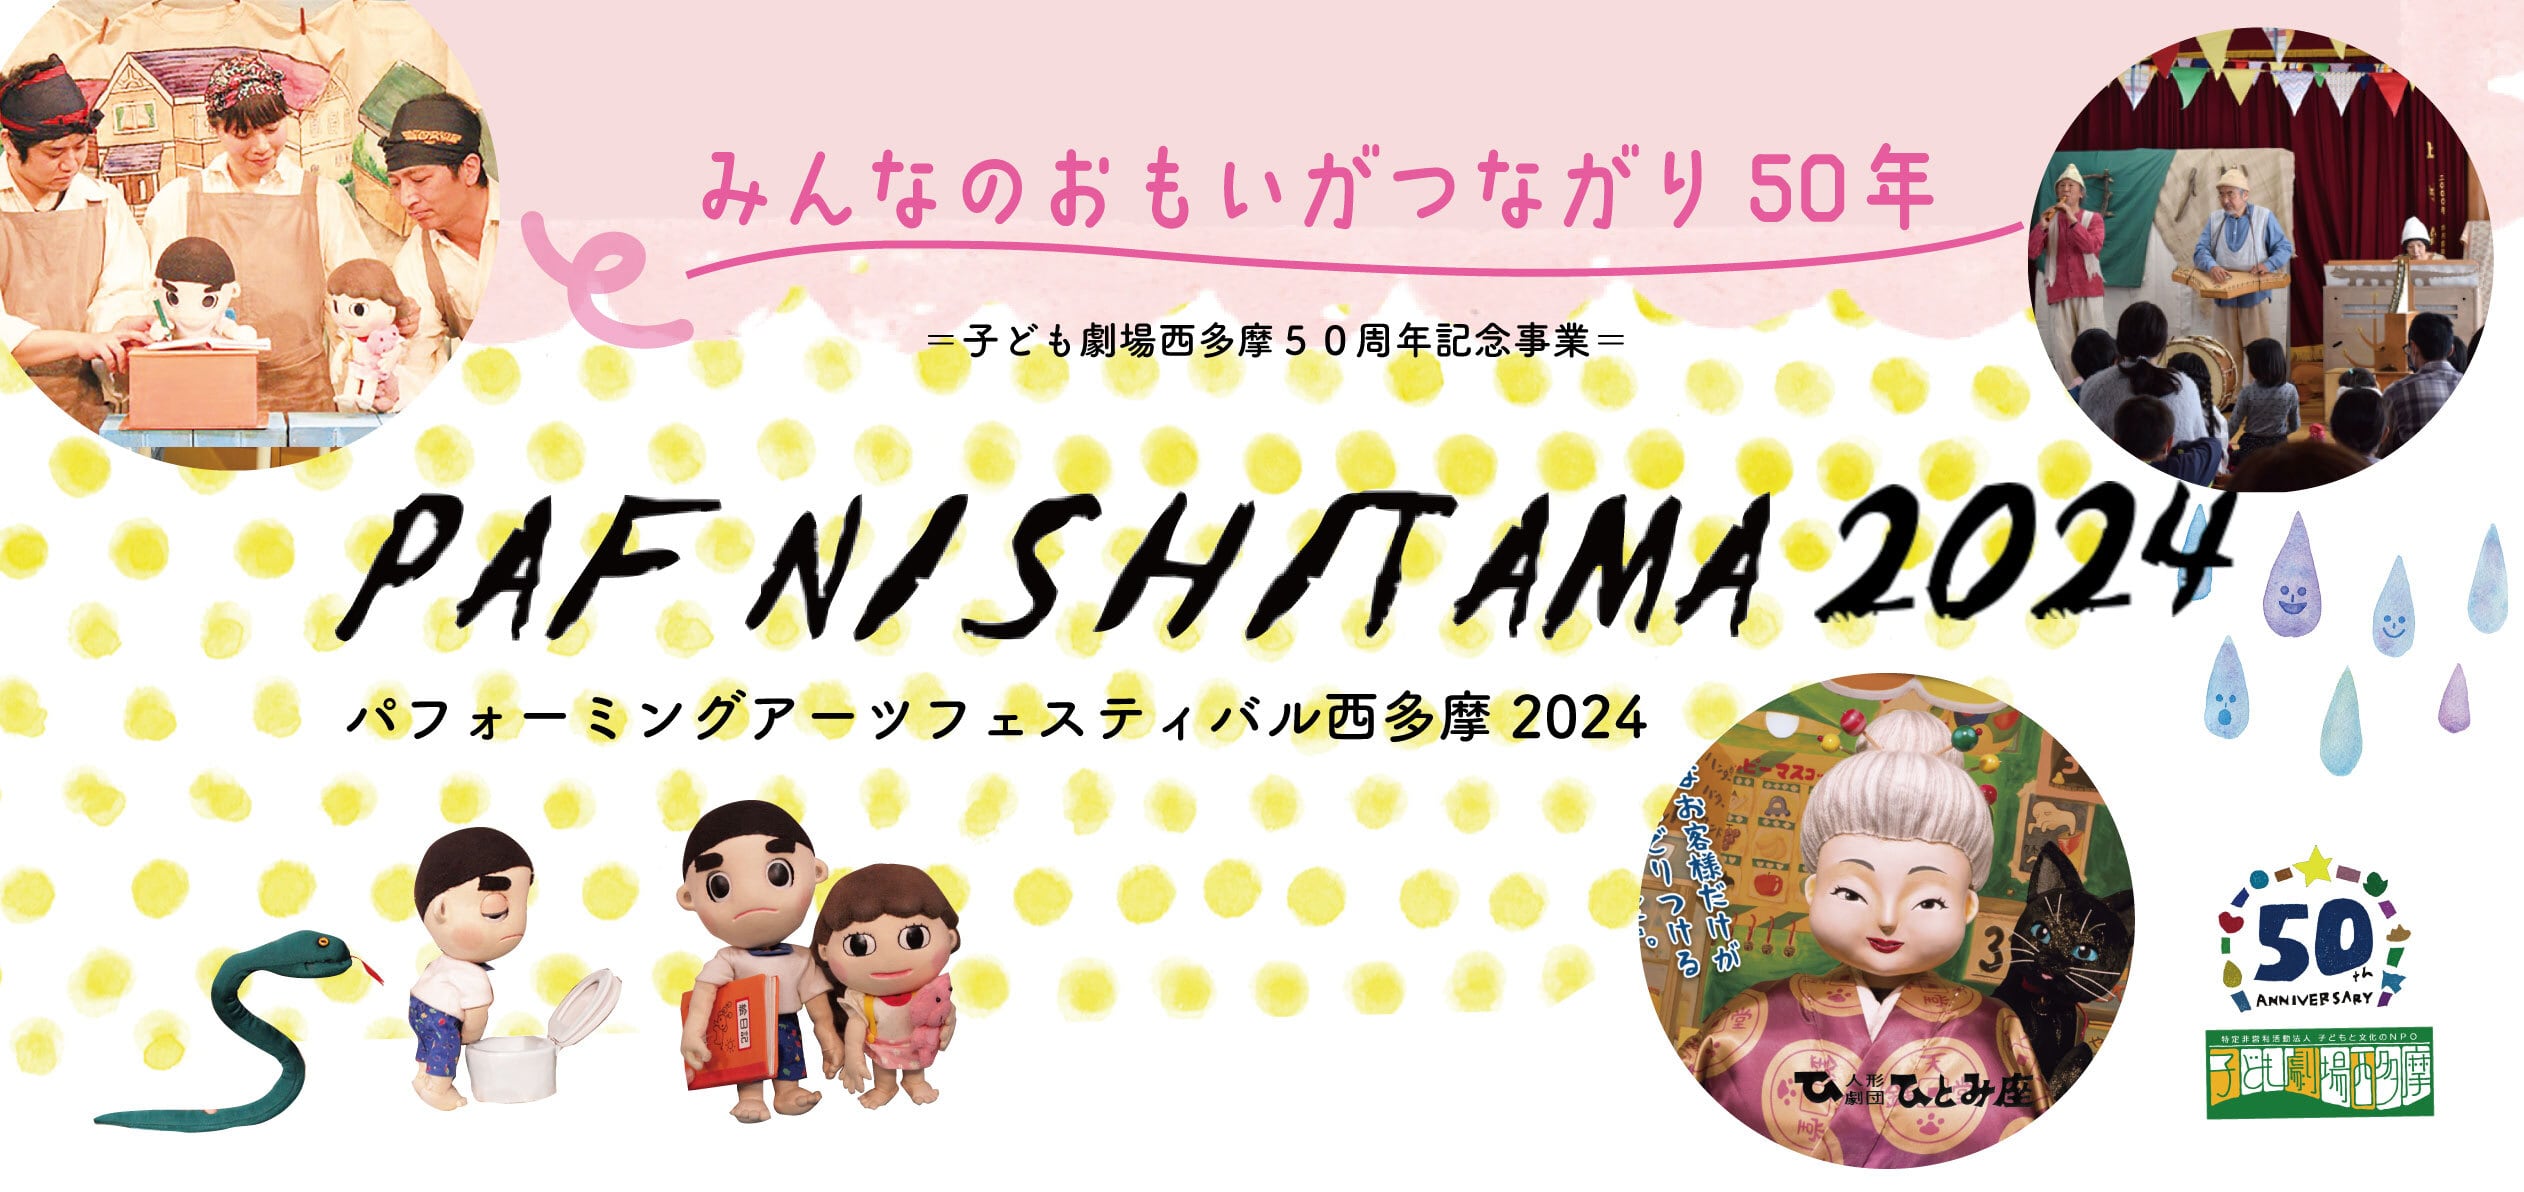 PAF NISHITAMA 2024 チケットサイト